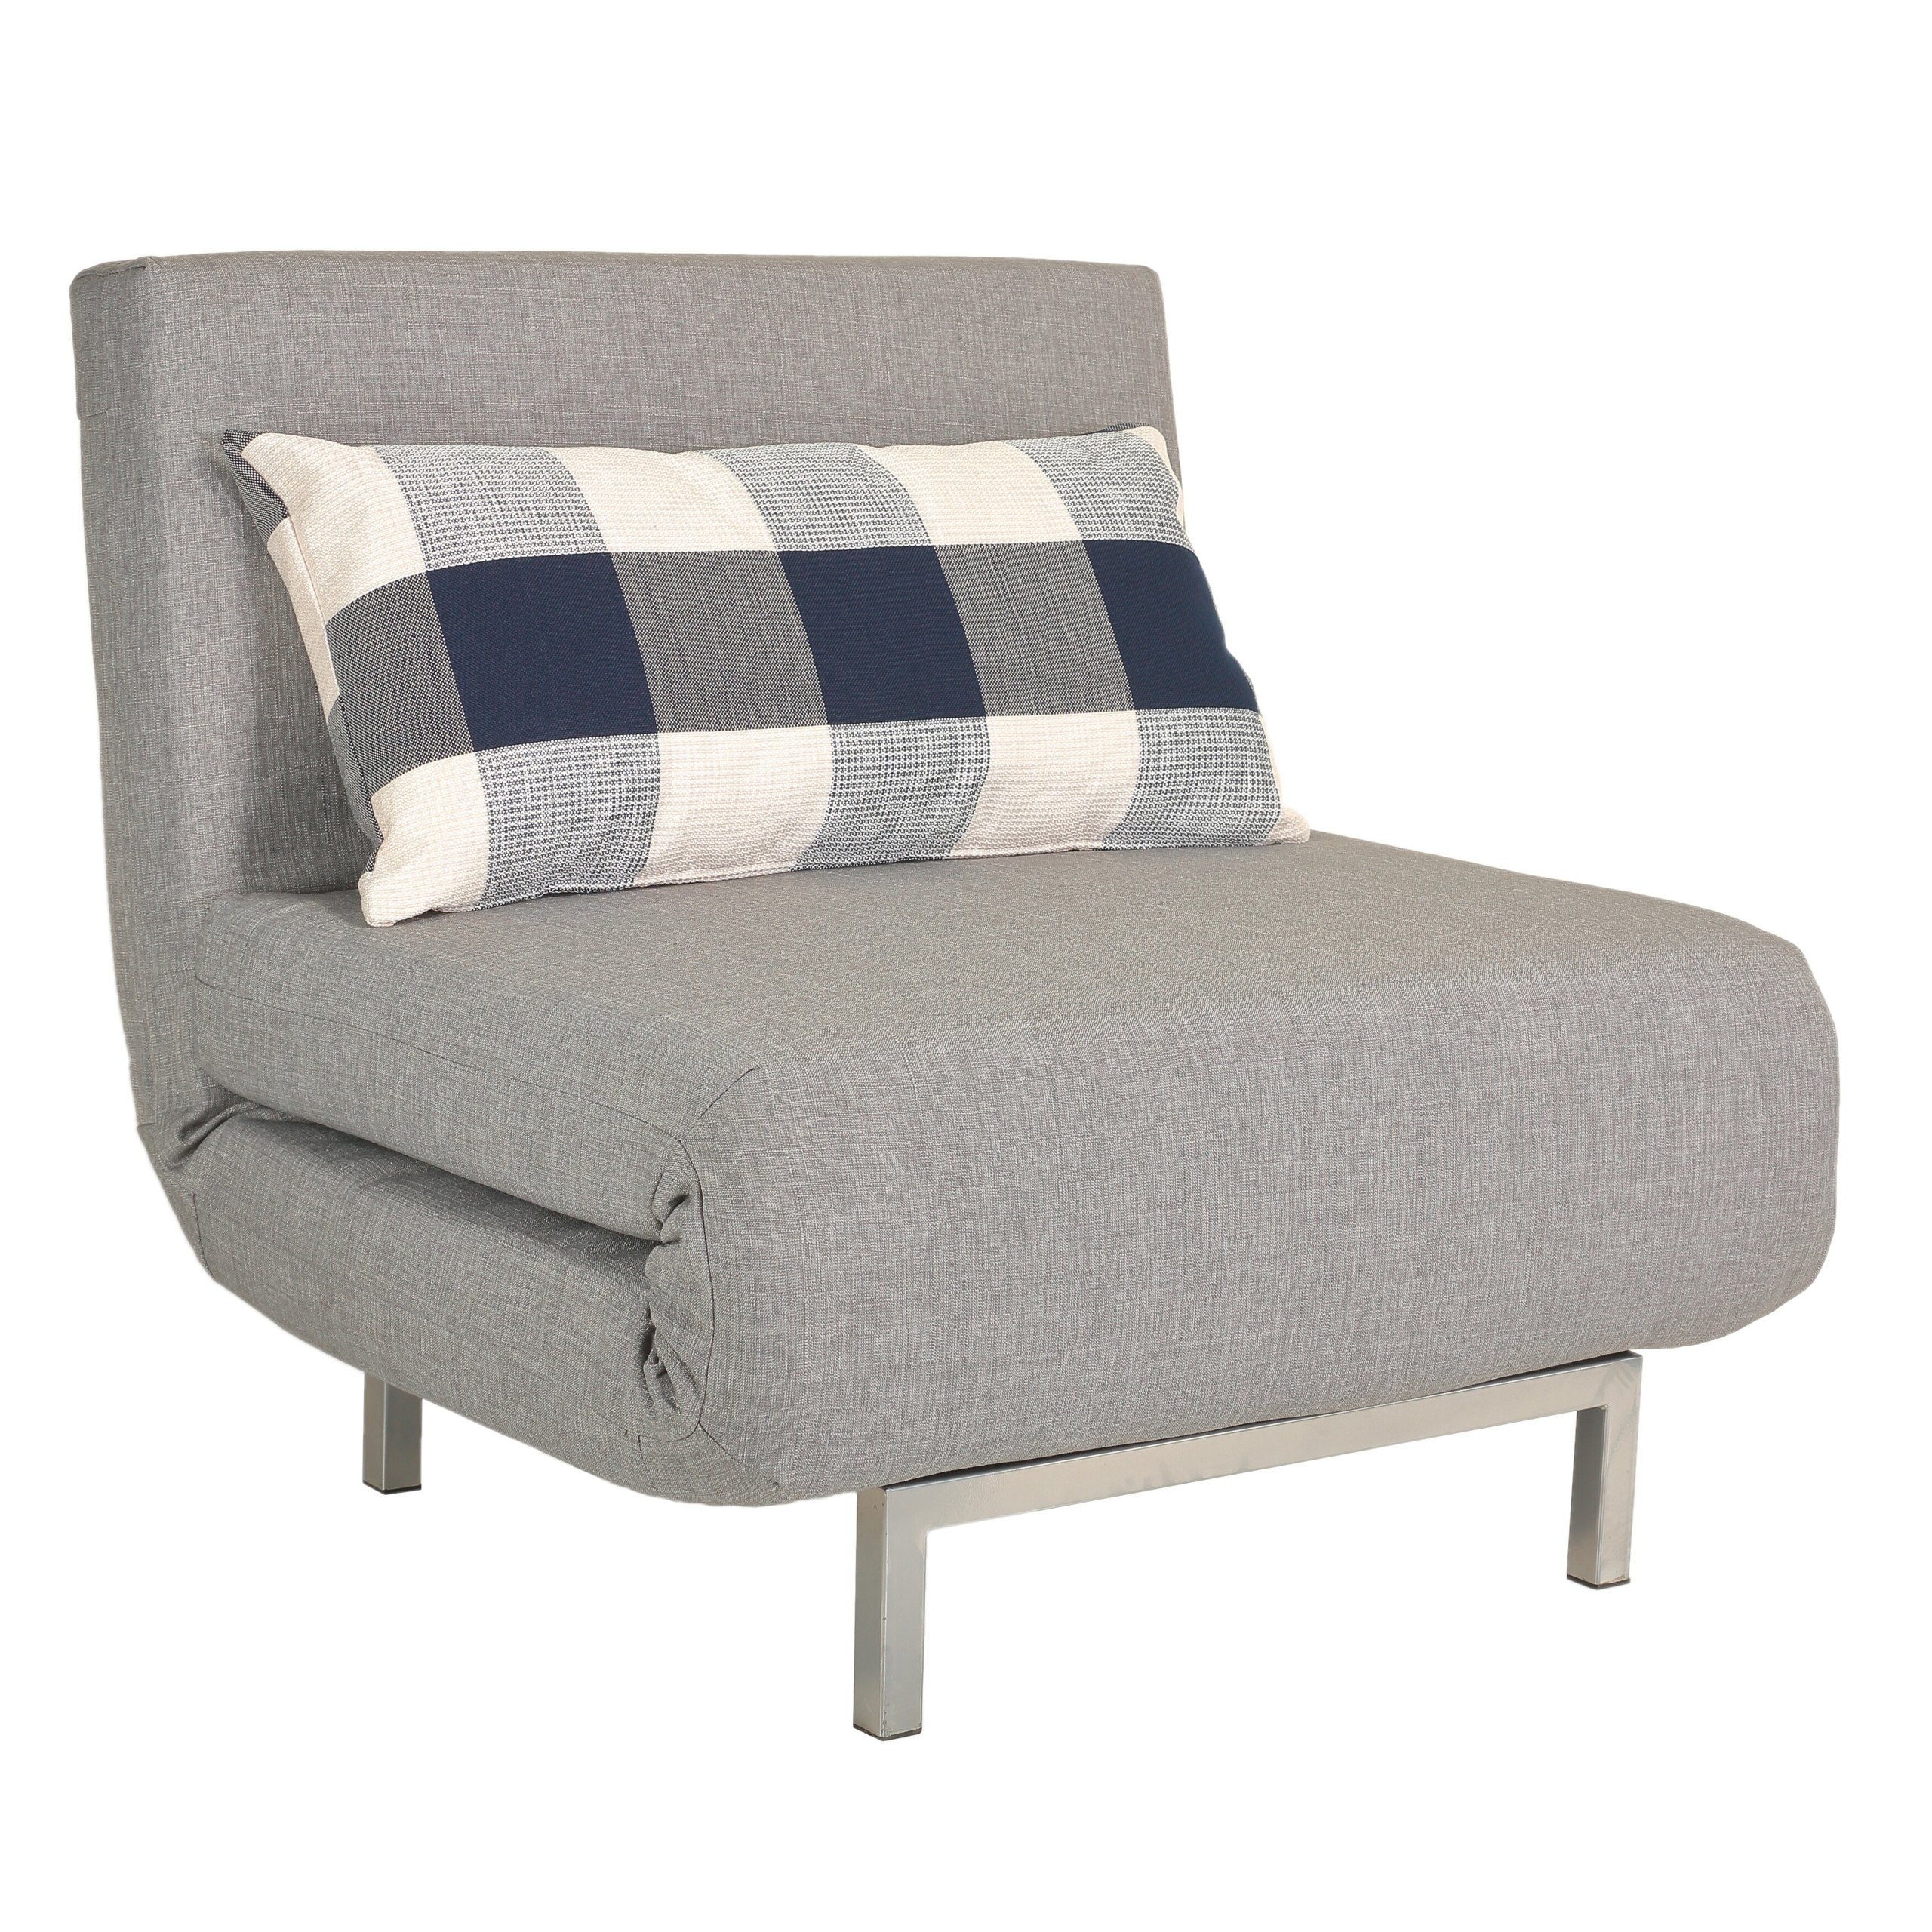 Cortesi Home Savion Convertible Accent Chair Bed, Grey